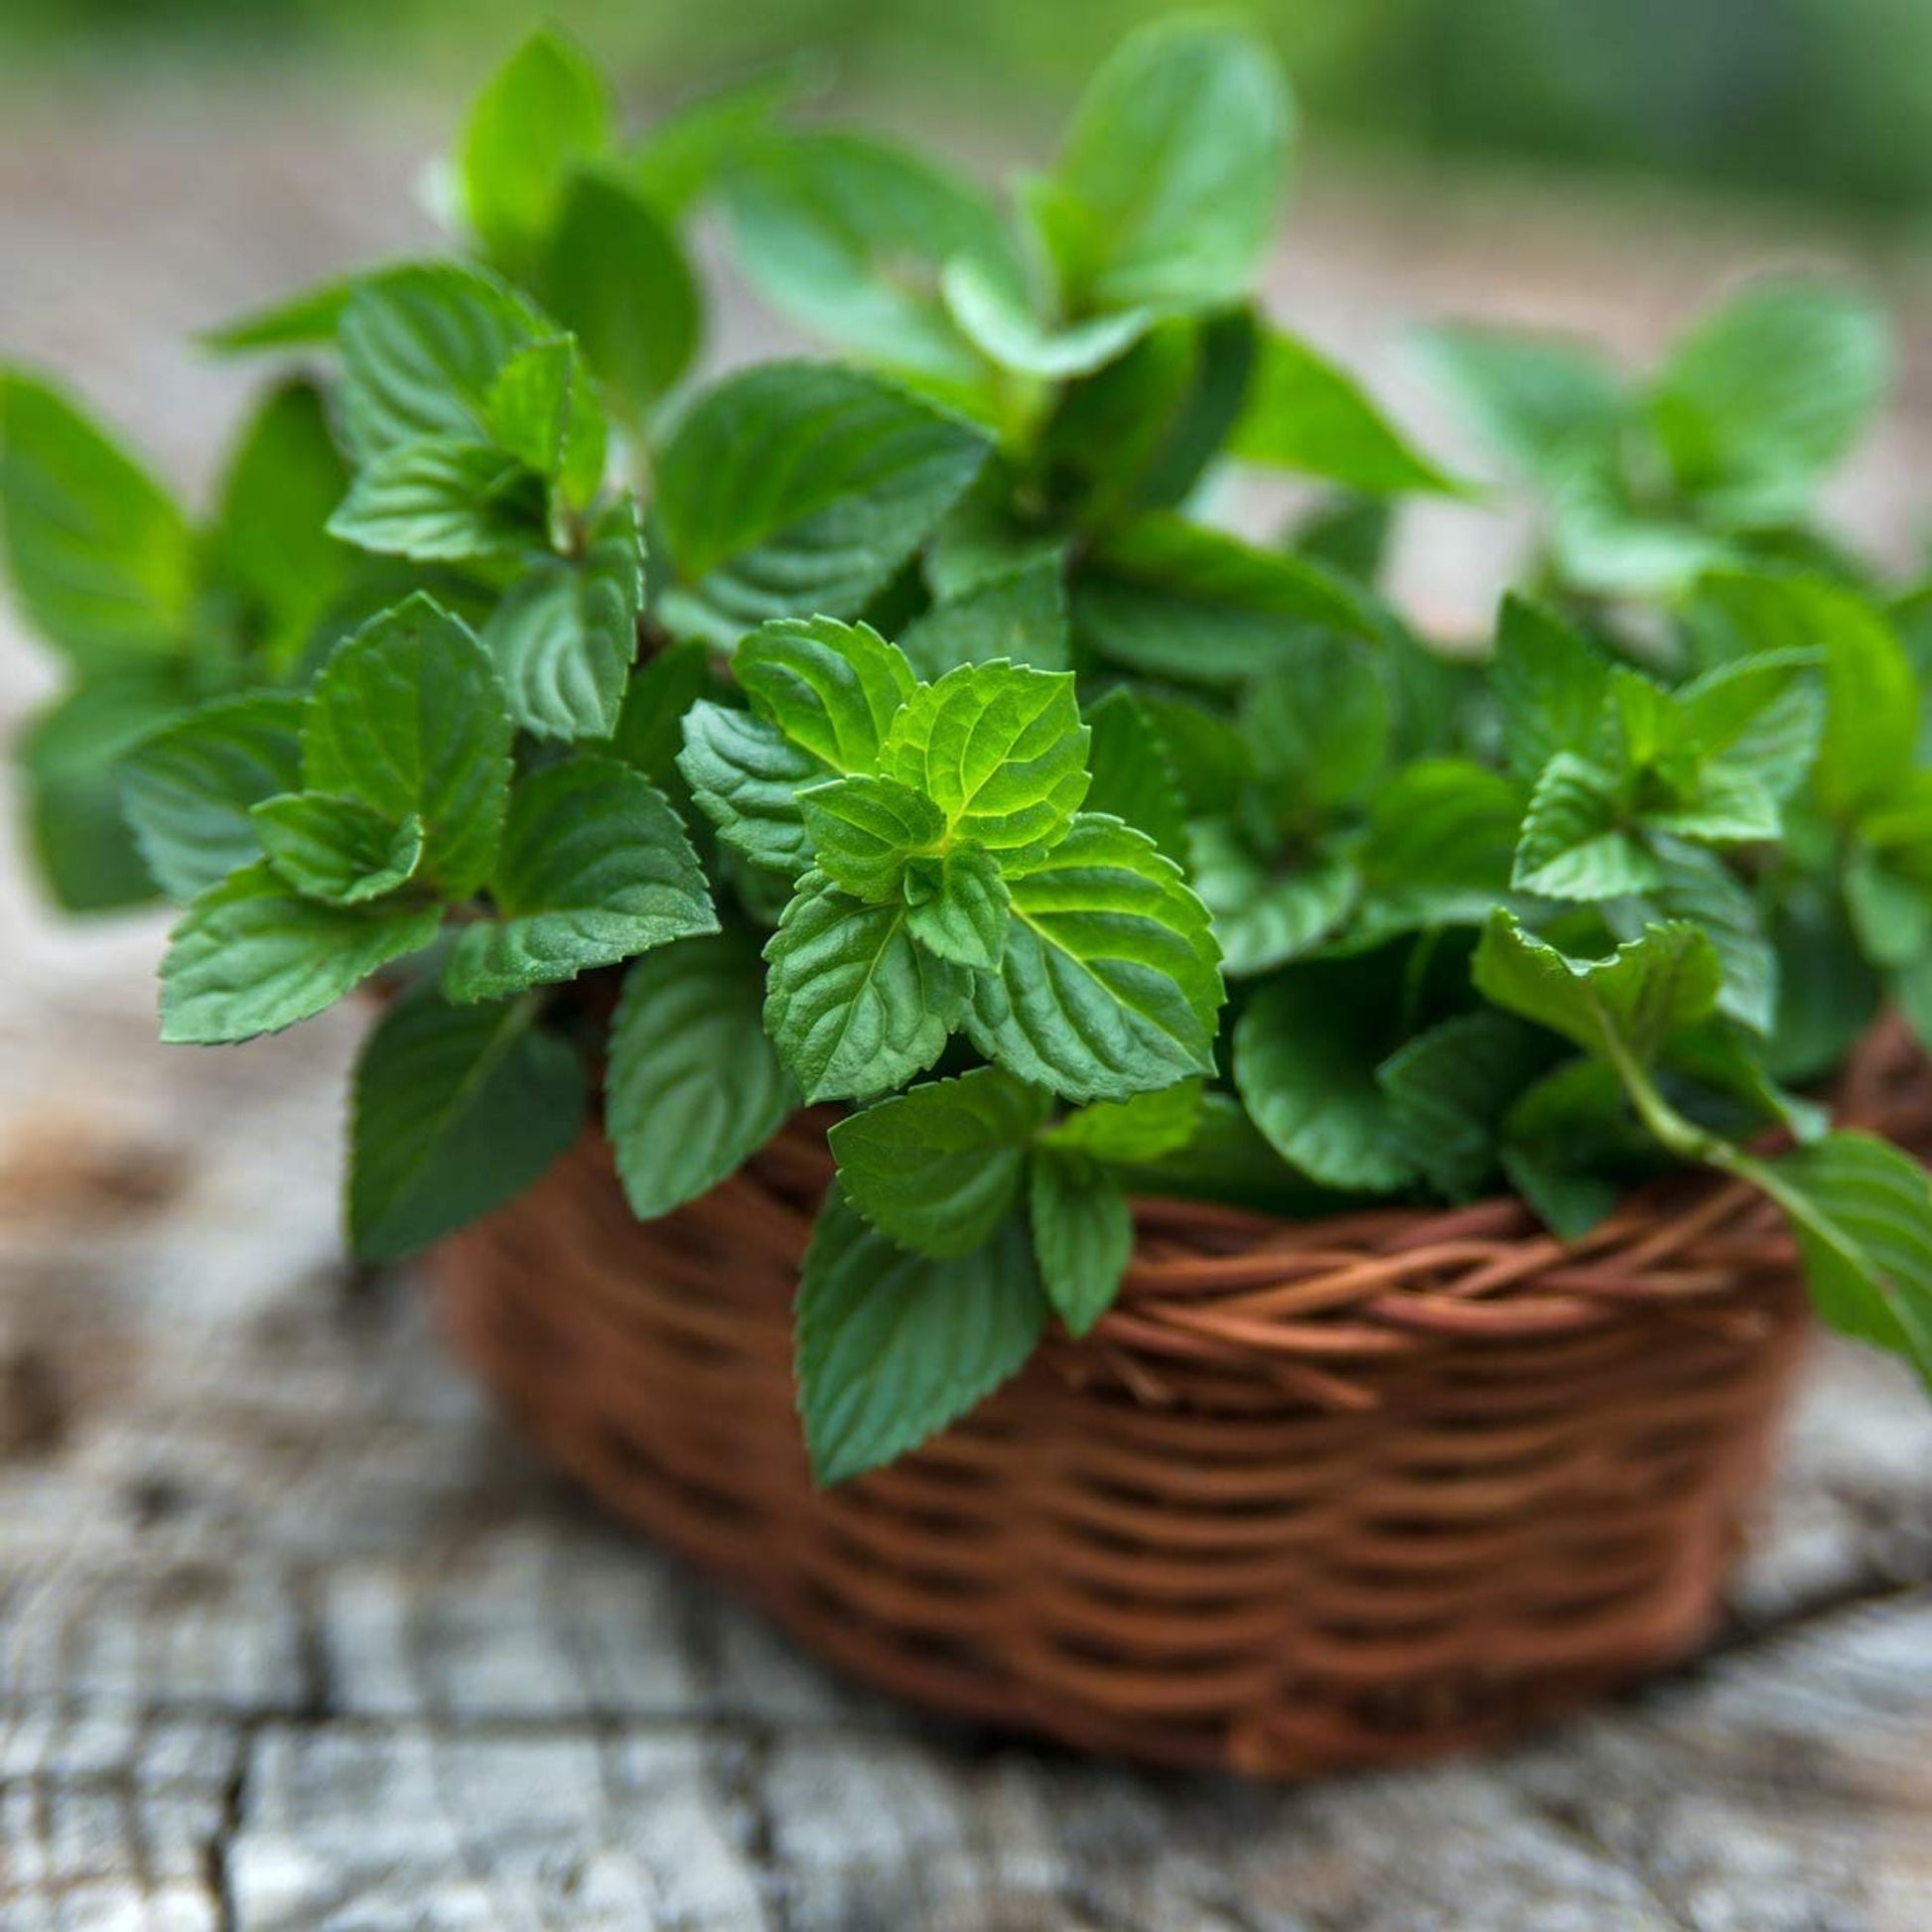 Herb Plants - Garden Mint - 2 x Full Plants in 10.5cm Pots - AcquaGarden